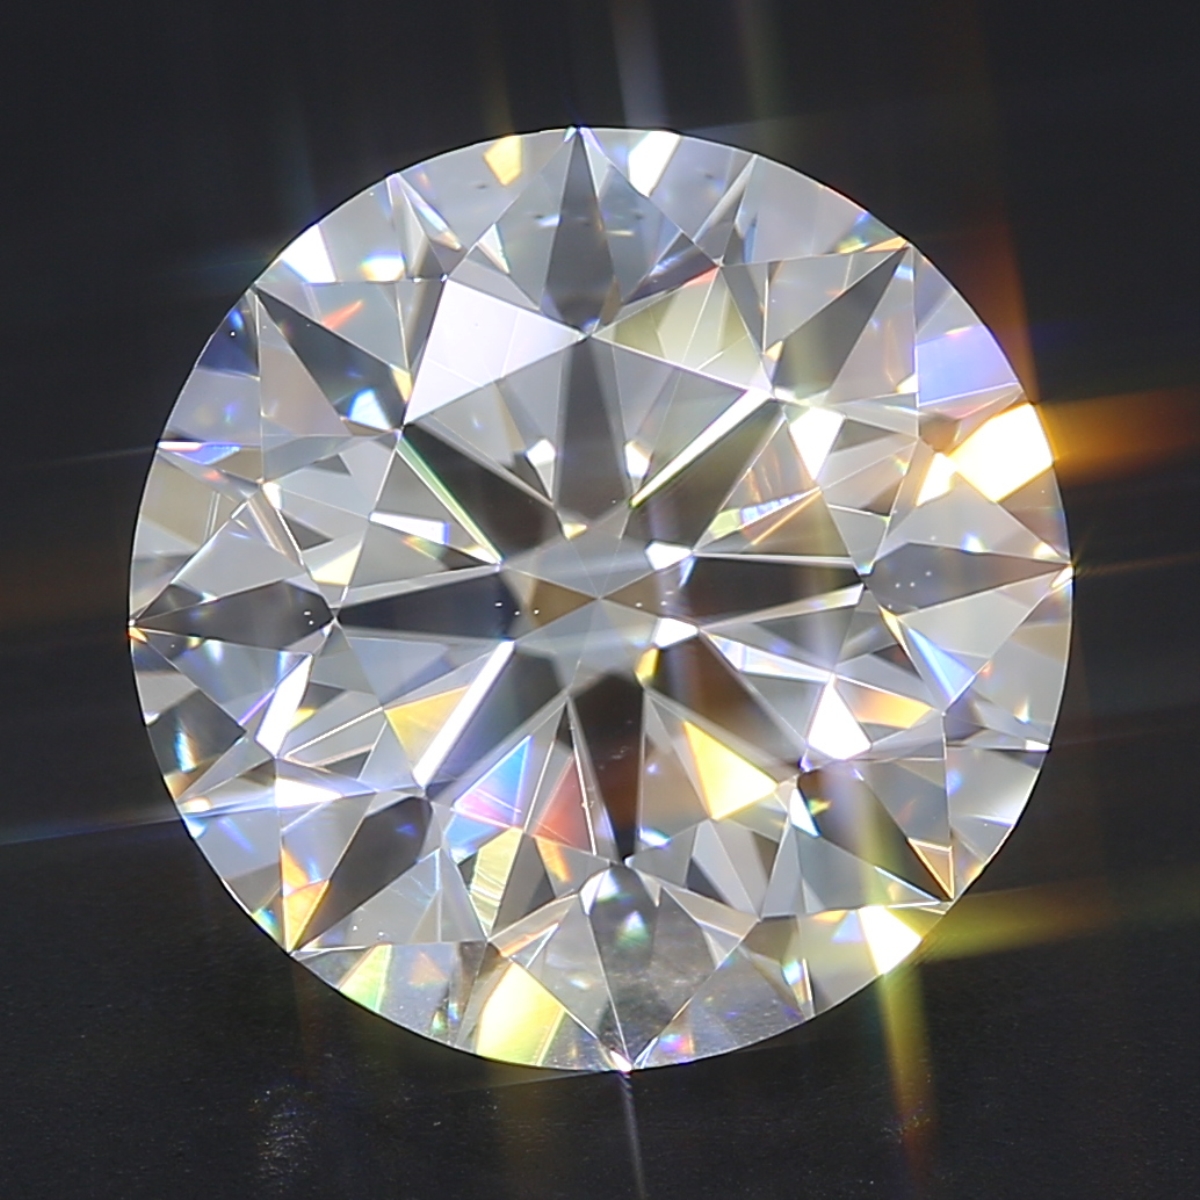 heera diamond 6.0 carate cubical zircon planet venus gemstone